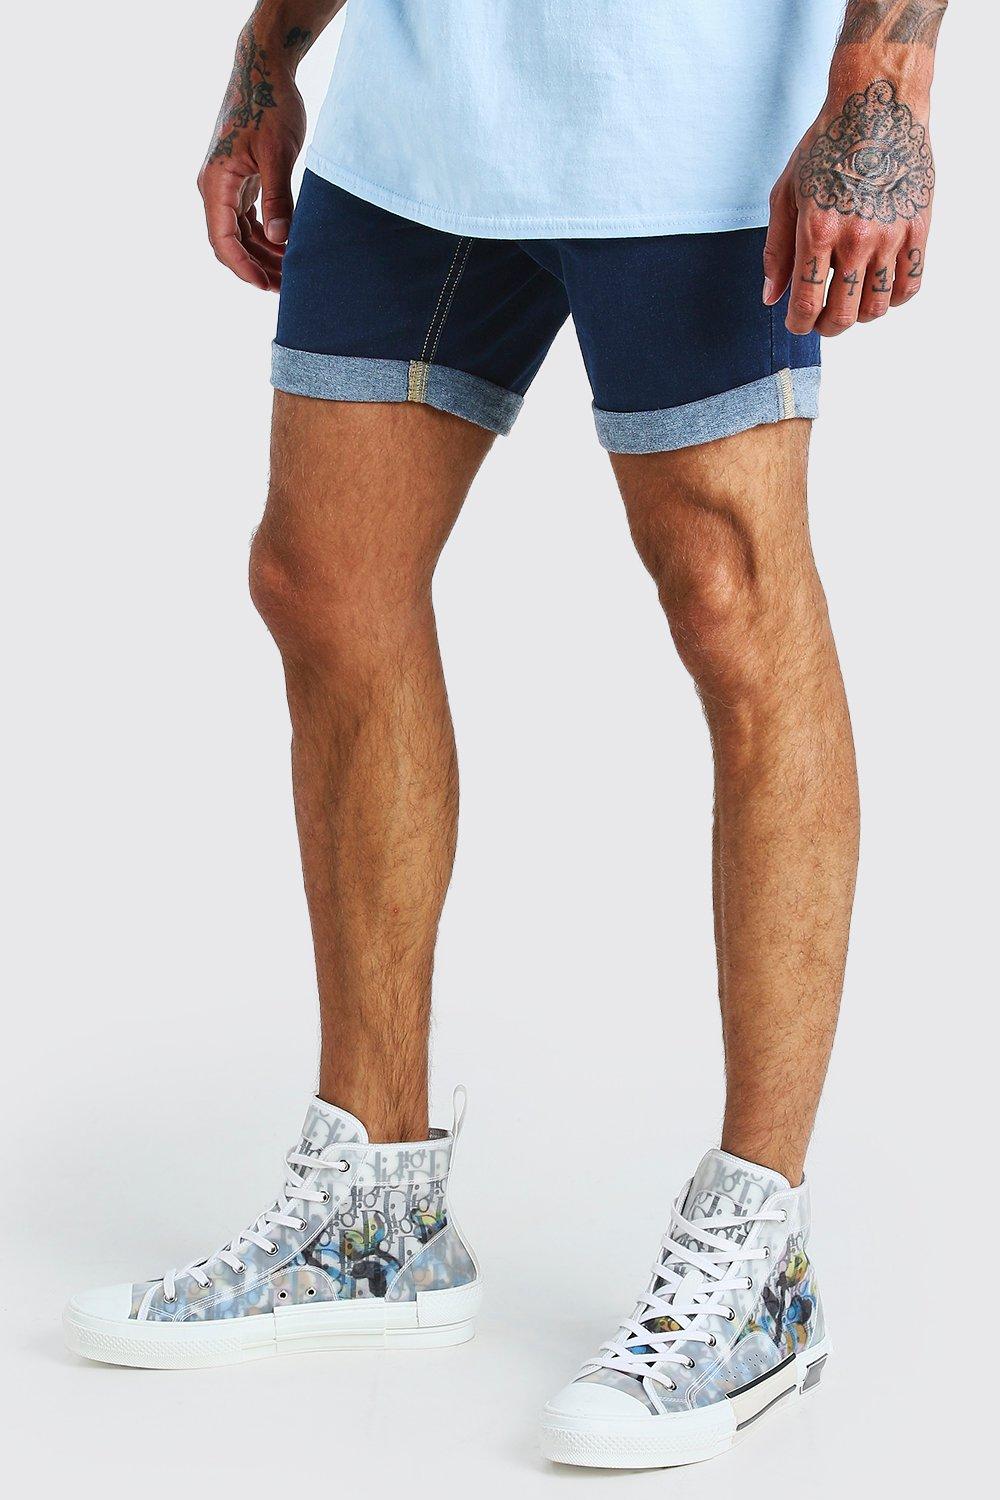 stretchy jean shorts